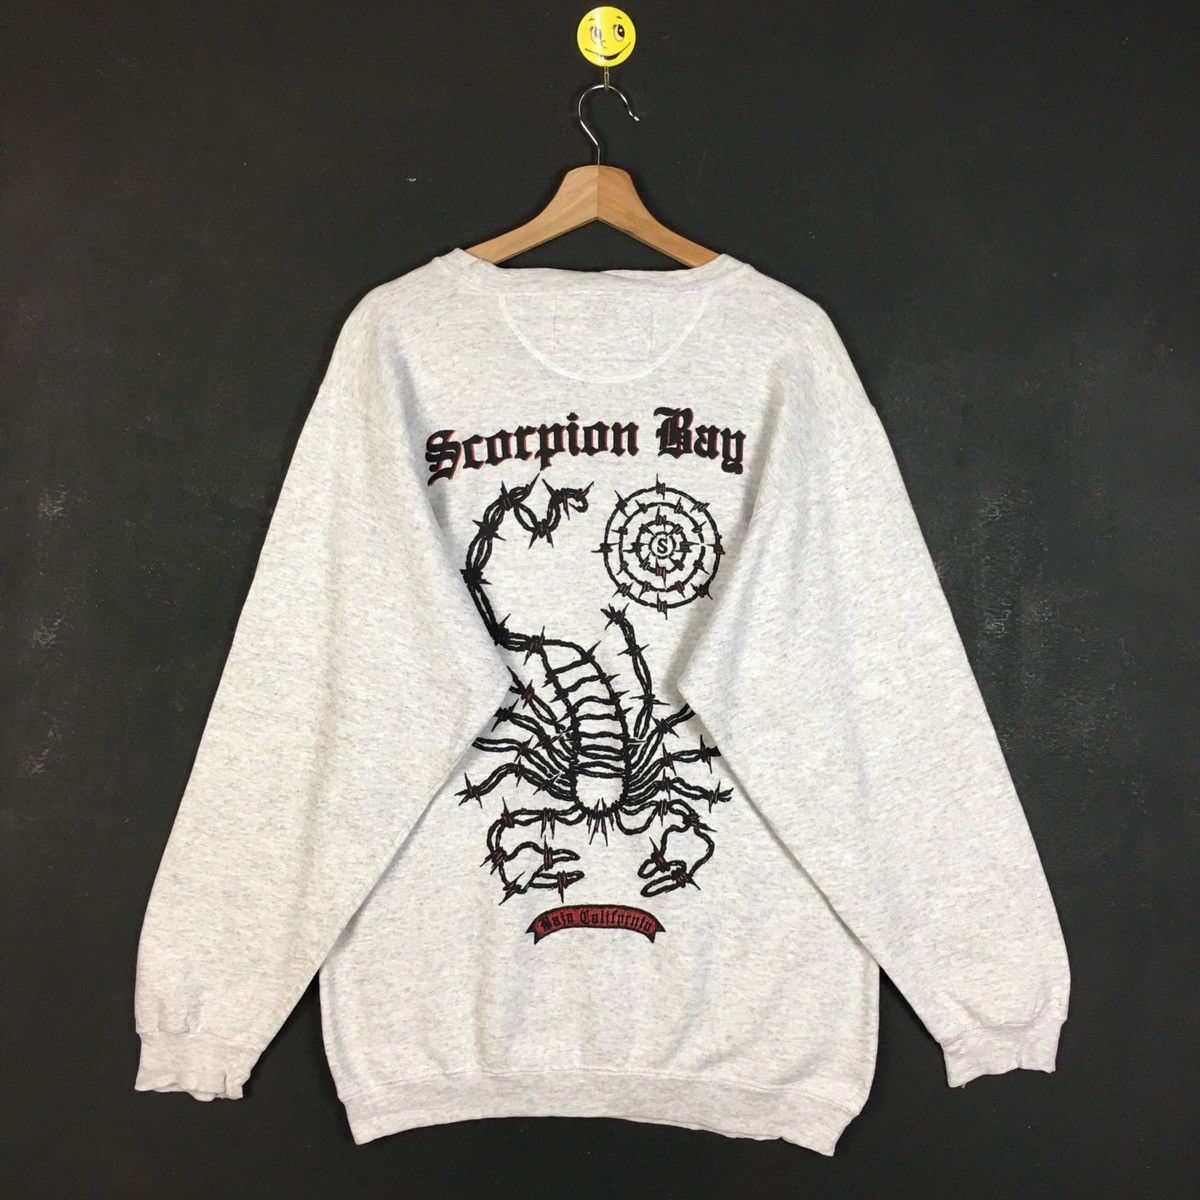 Vintage Scorpion Bay sweatshirt Size US M / EU 48-50 / 2 - 3 Thumbnail